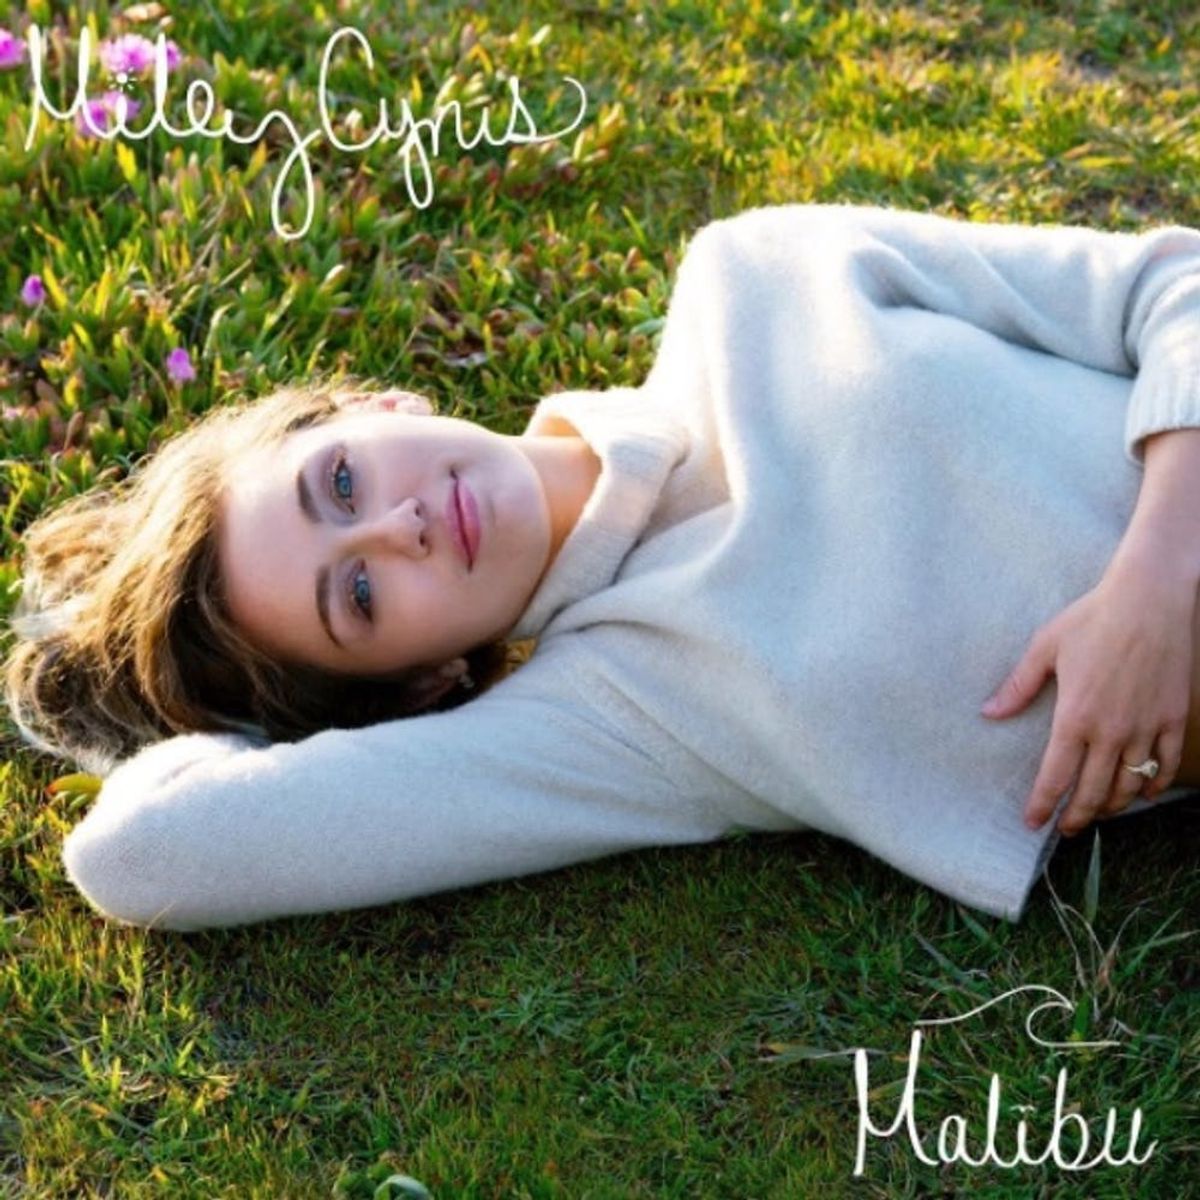 Listen to Miley Cyrus’s Liam Hemsworth-Inspired Song “Malibu”